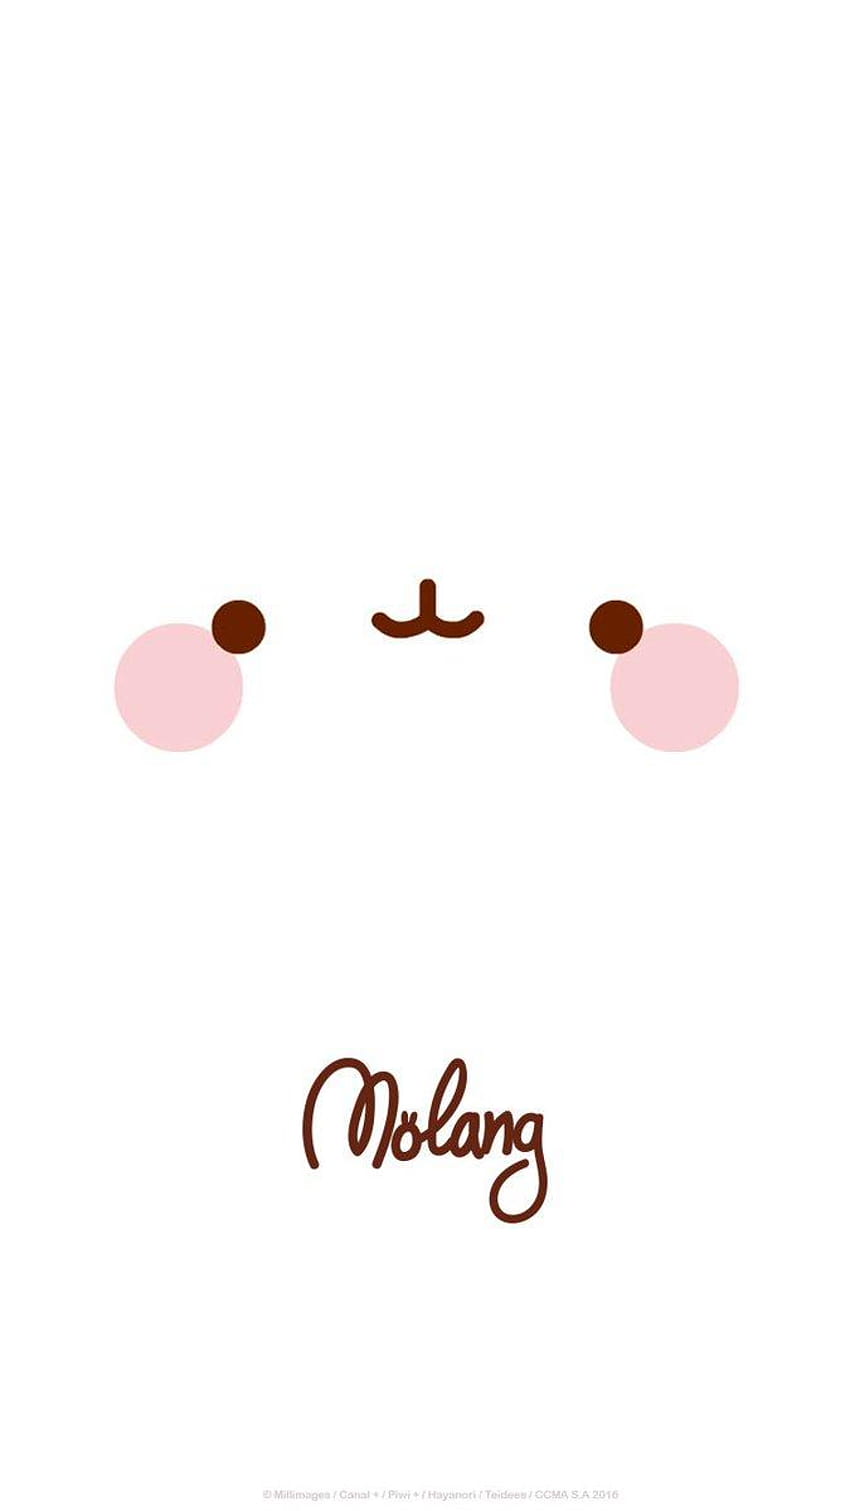 A cute cartoon character with the word molang - Molang